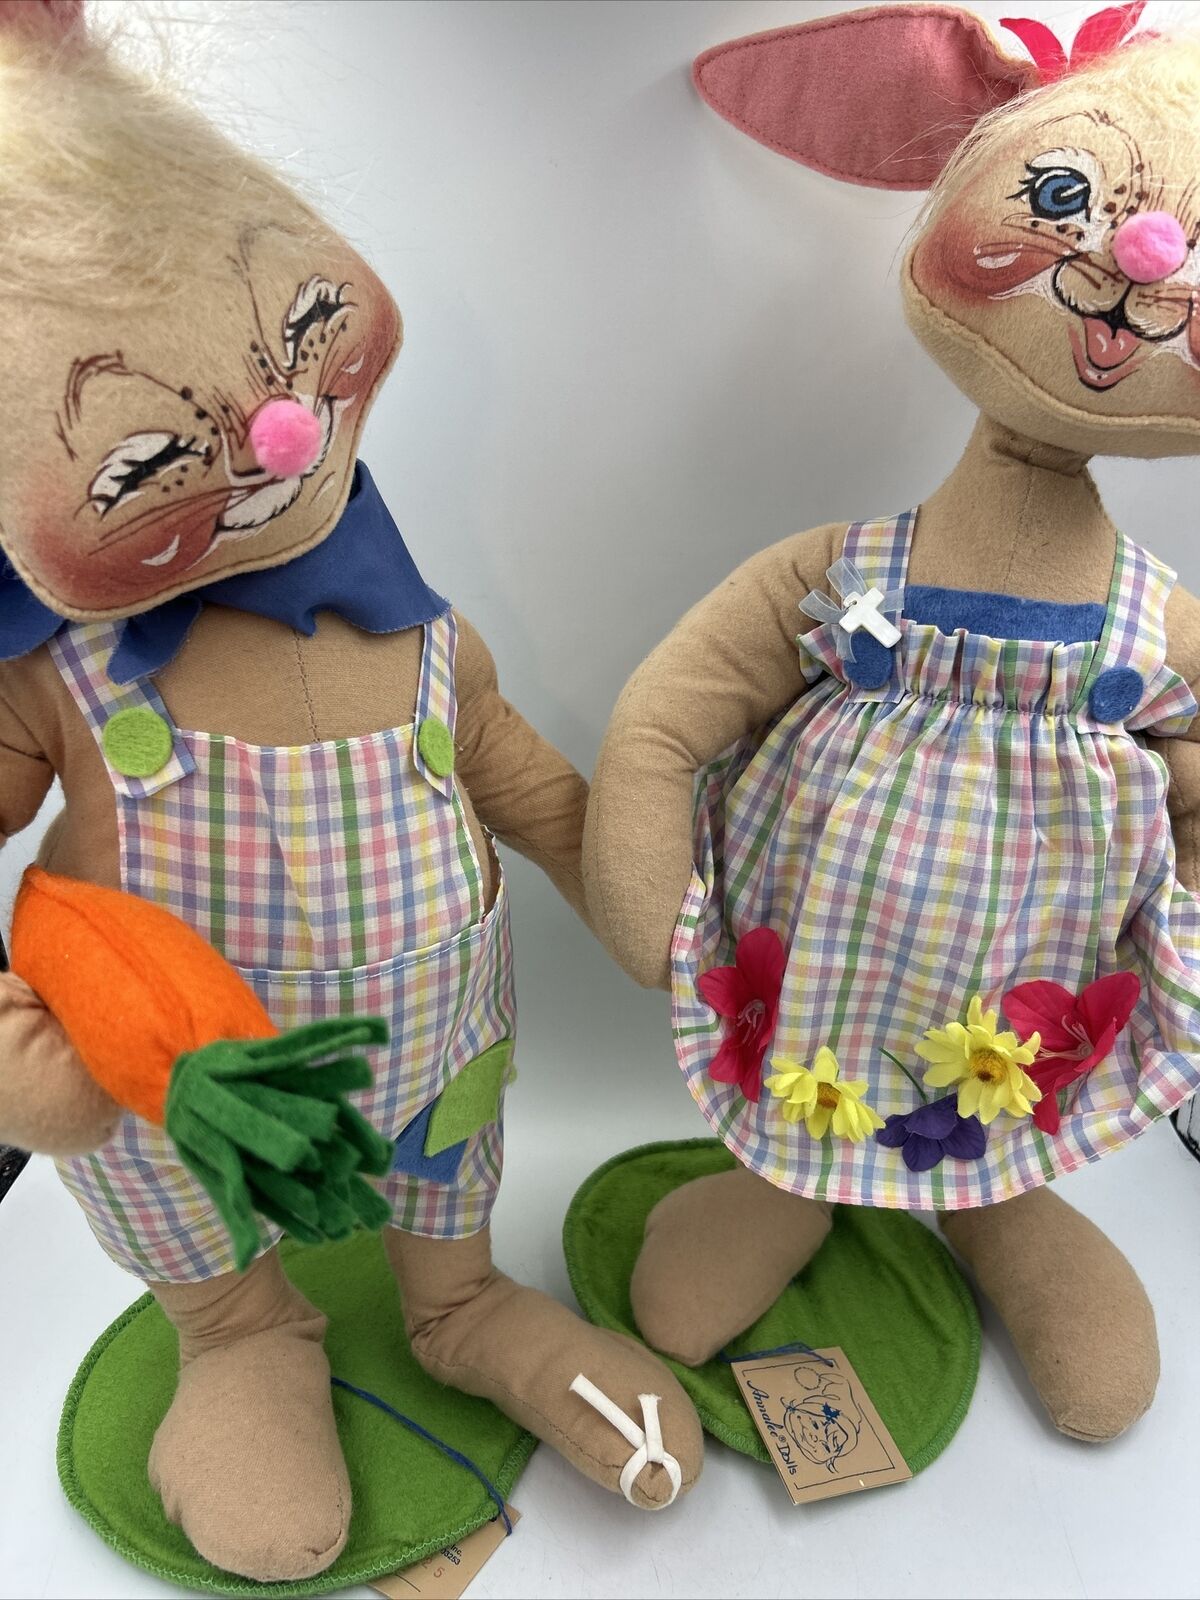 Annalee Dolls, Spring Boy & Spring Girl Bunny Rabbits Pair 1992, 21” Easter